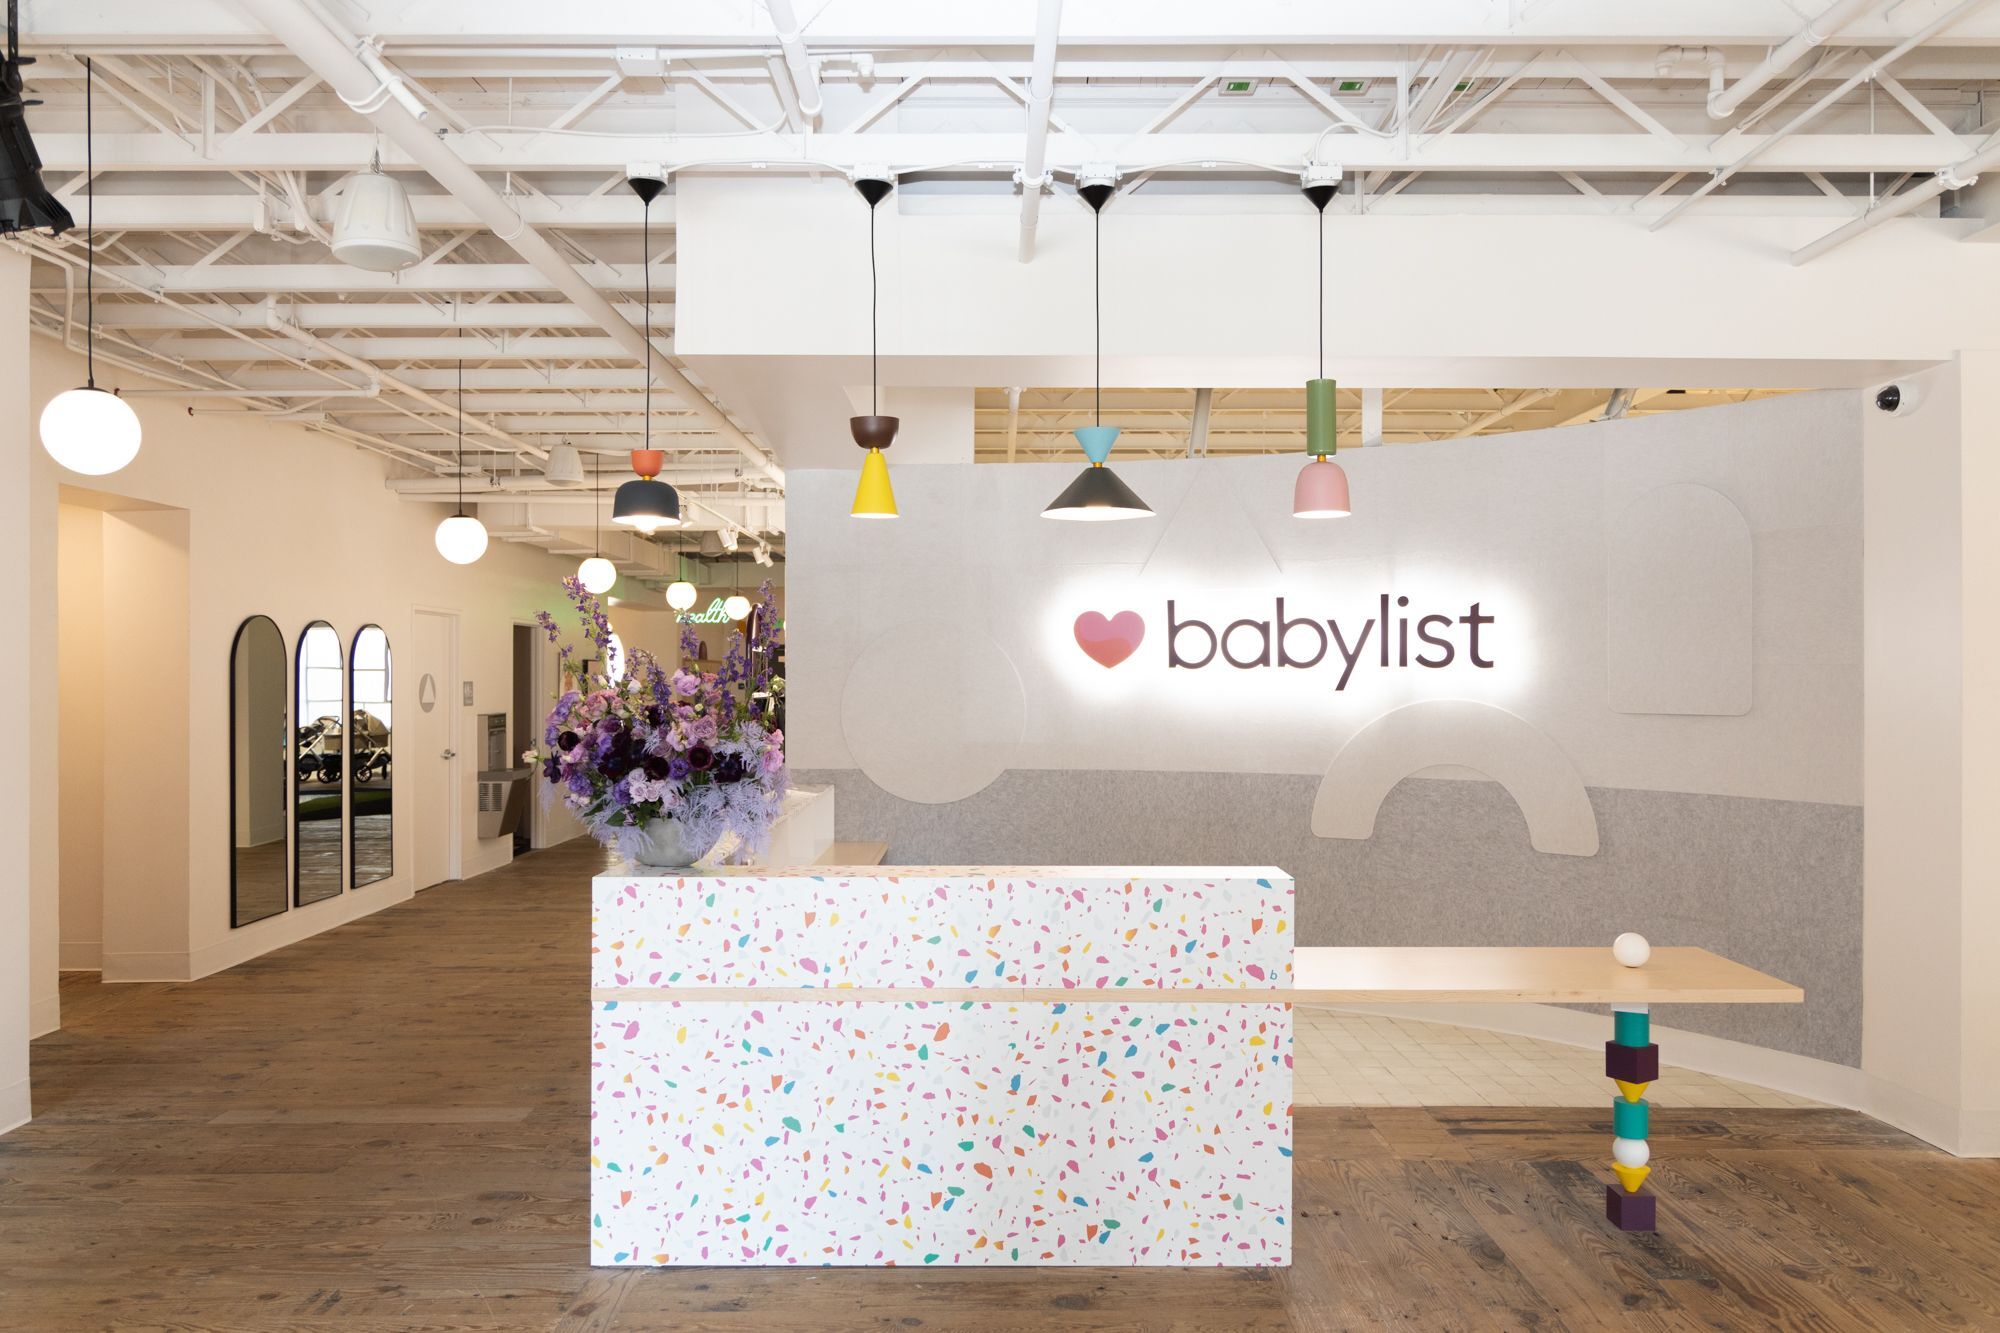 Babylist lobby entrance